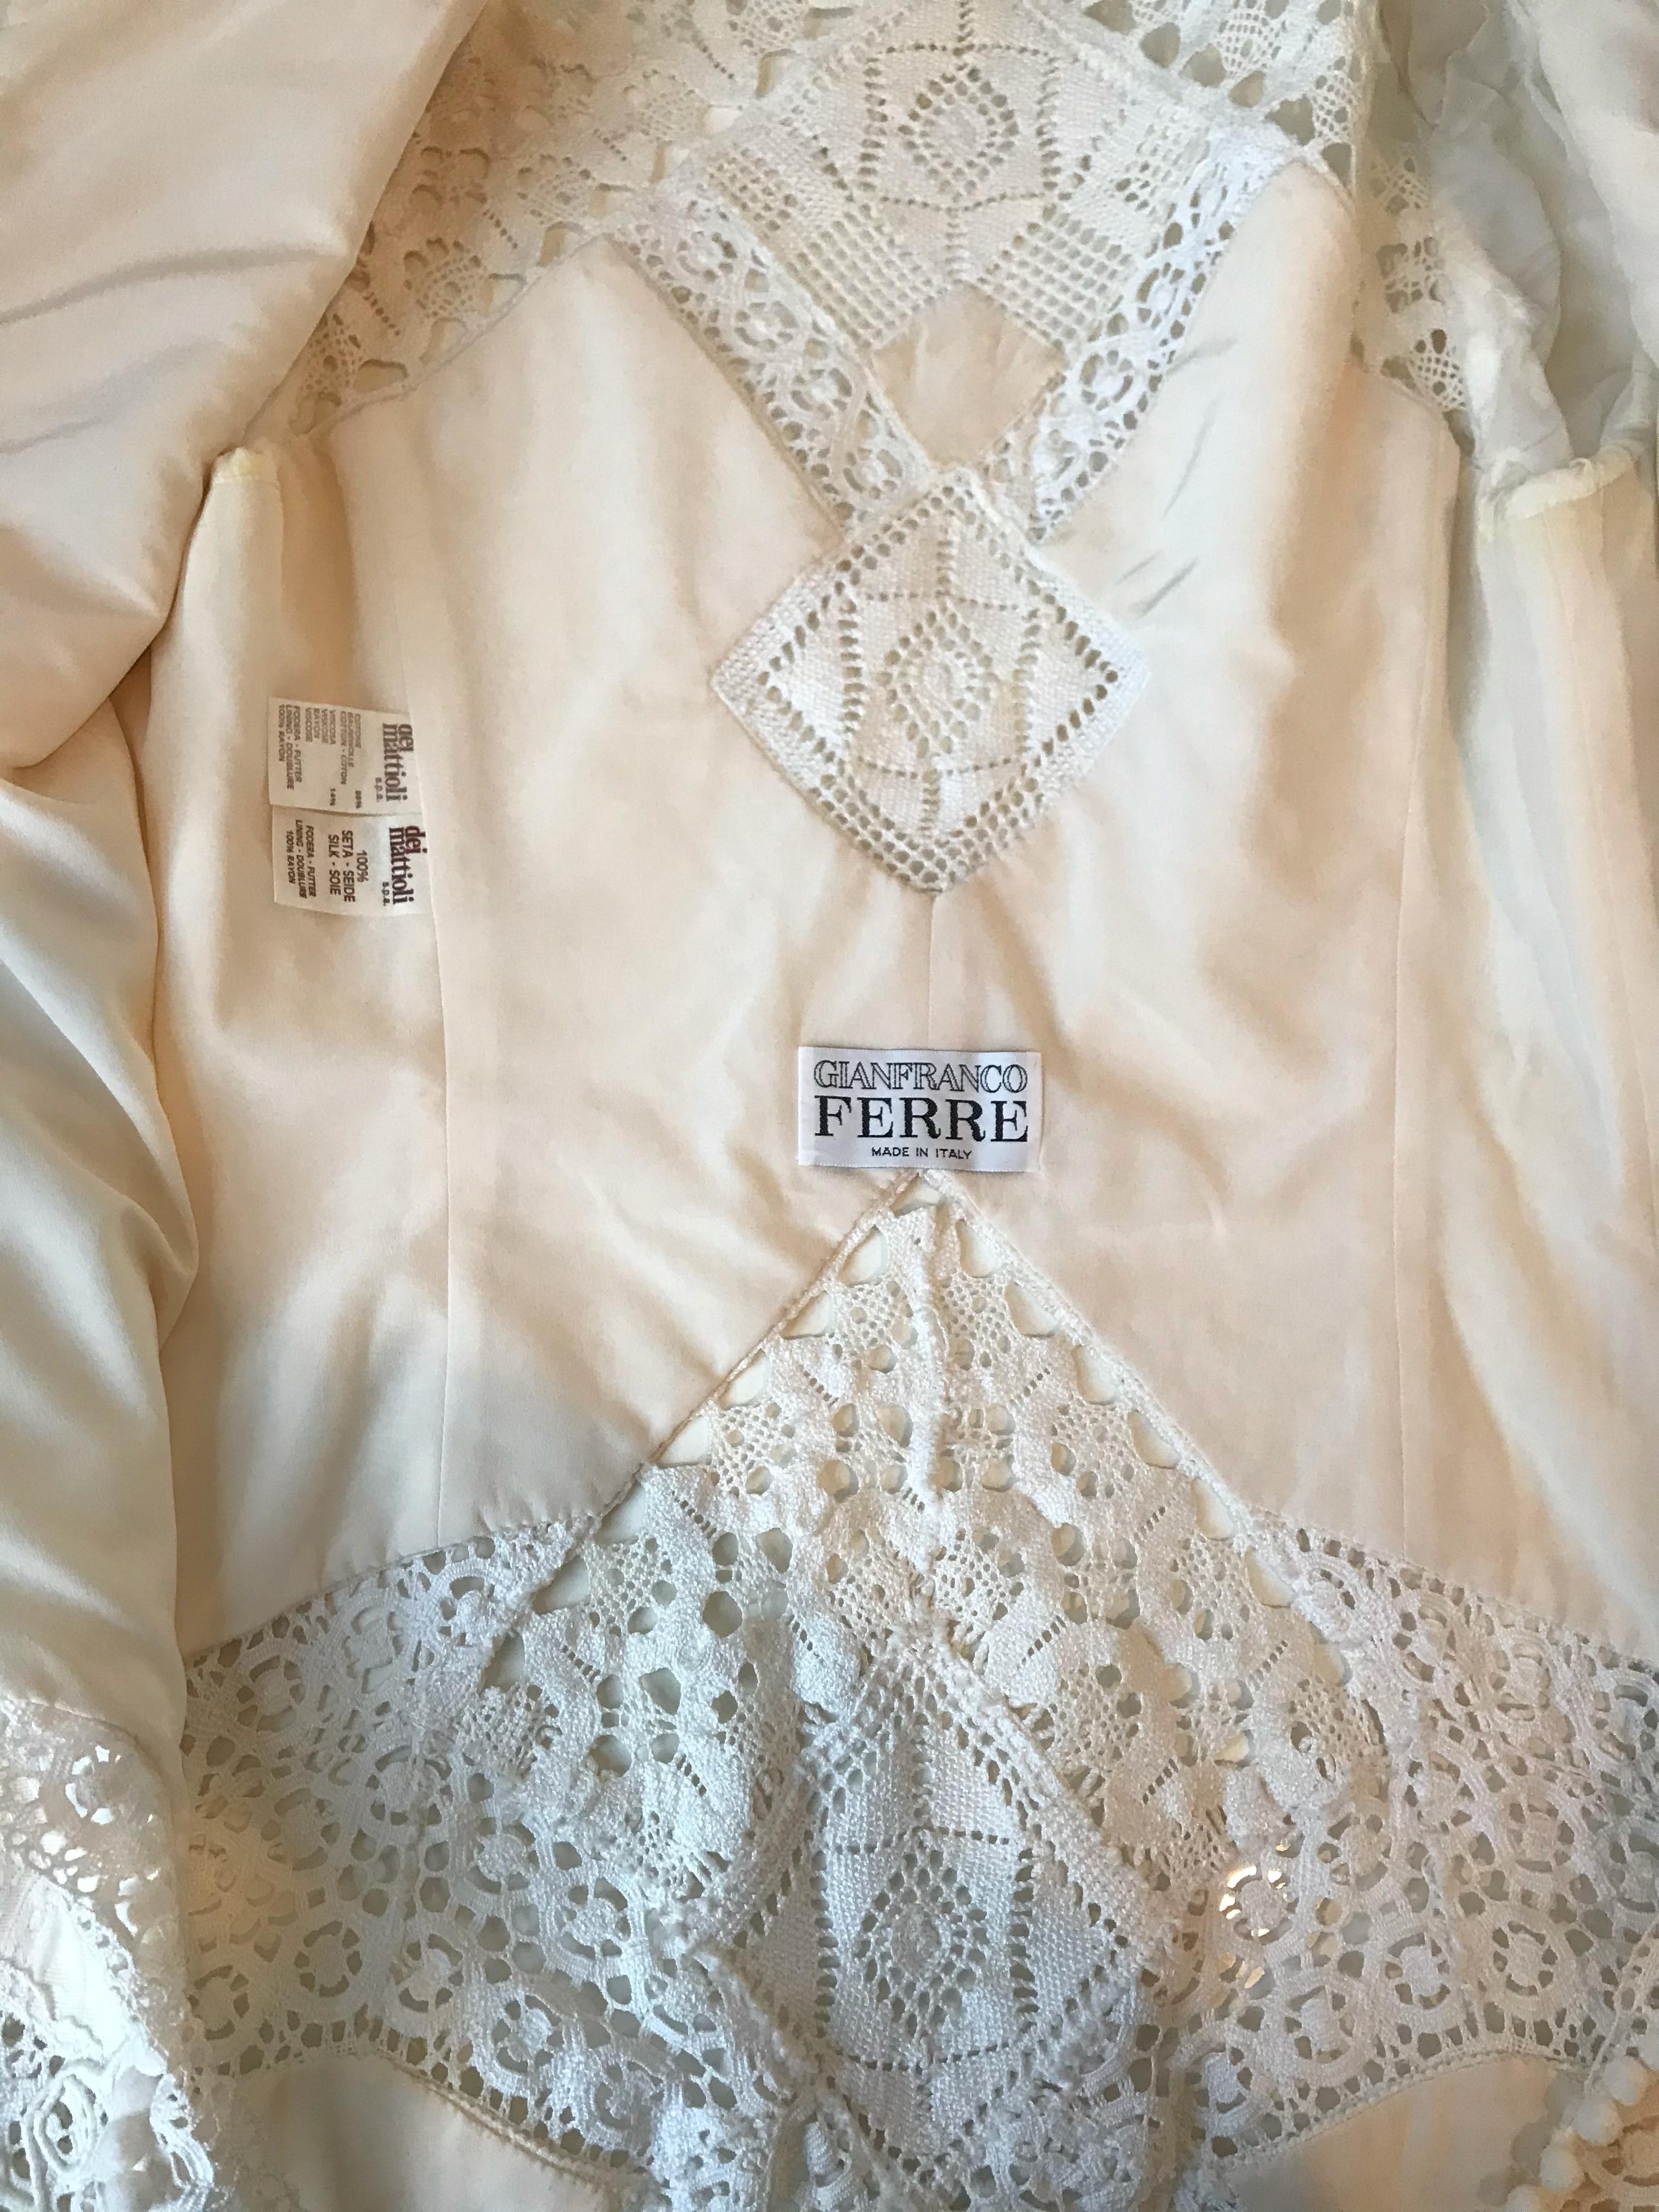 Gianfranco Ferre Brocade Crochet Lace & Pom Pom Detail Jacket and Skirt Ensemble For Sale 7